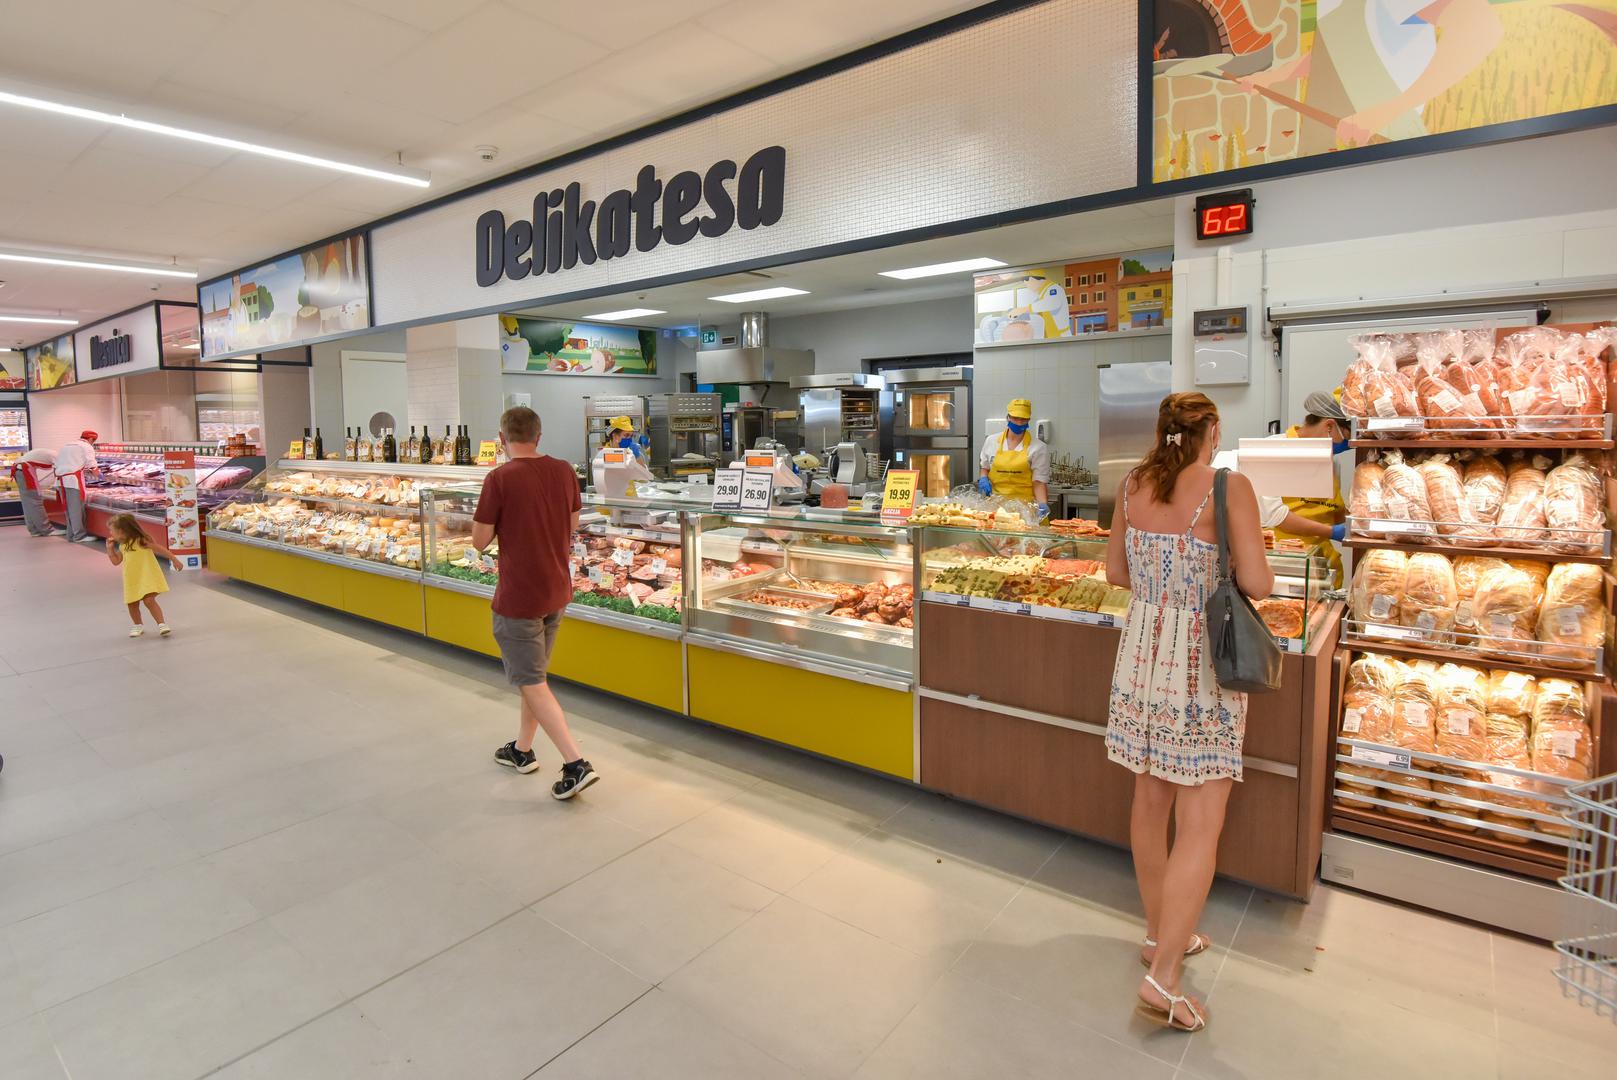 13.08.2020., Zadar - Talijanski market Eurospin otvorio je svoja vrata zadranima na Jadranskoj magistrali.
Photo: Dino Stanin/PIXSELL